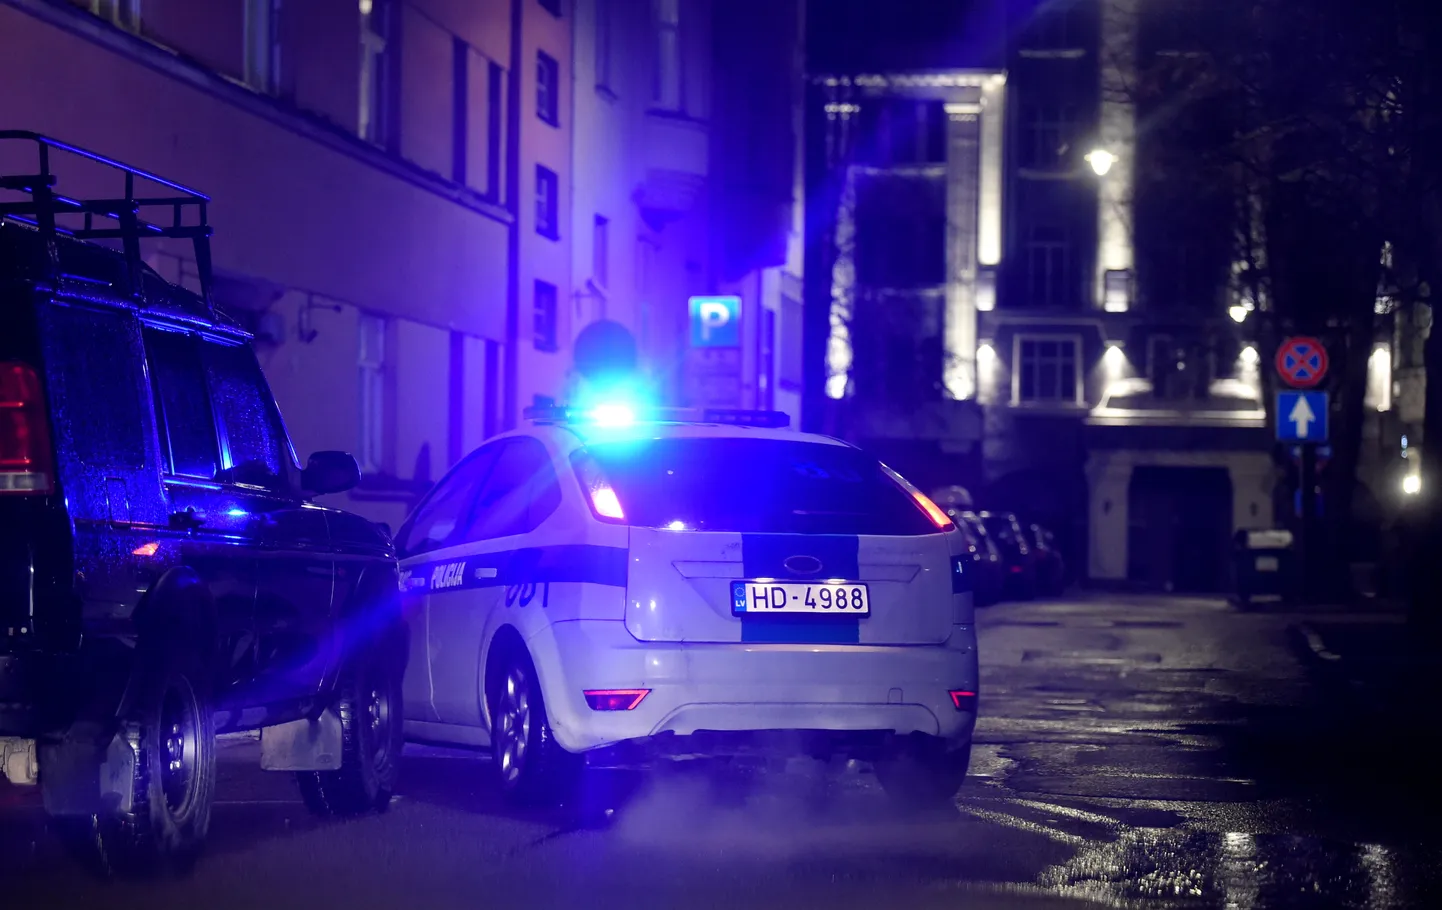 Rīgas pašvaldības policija.